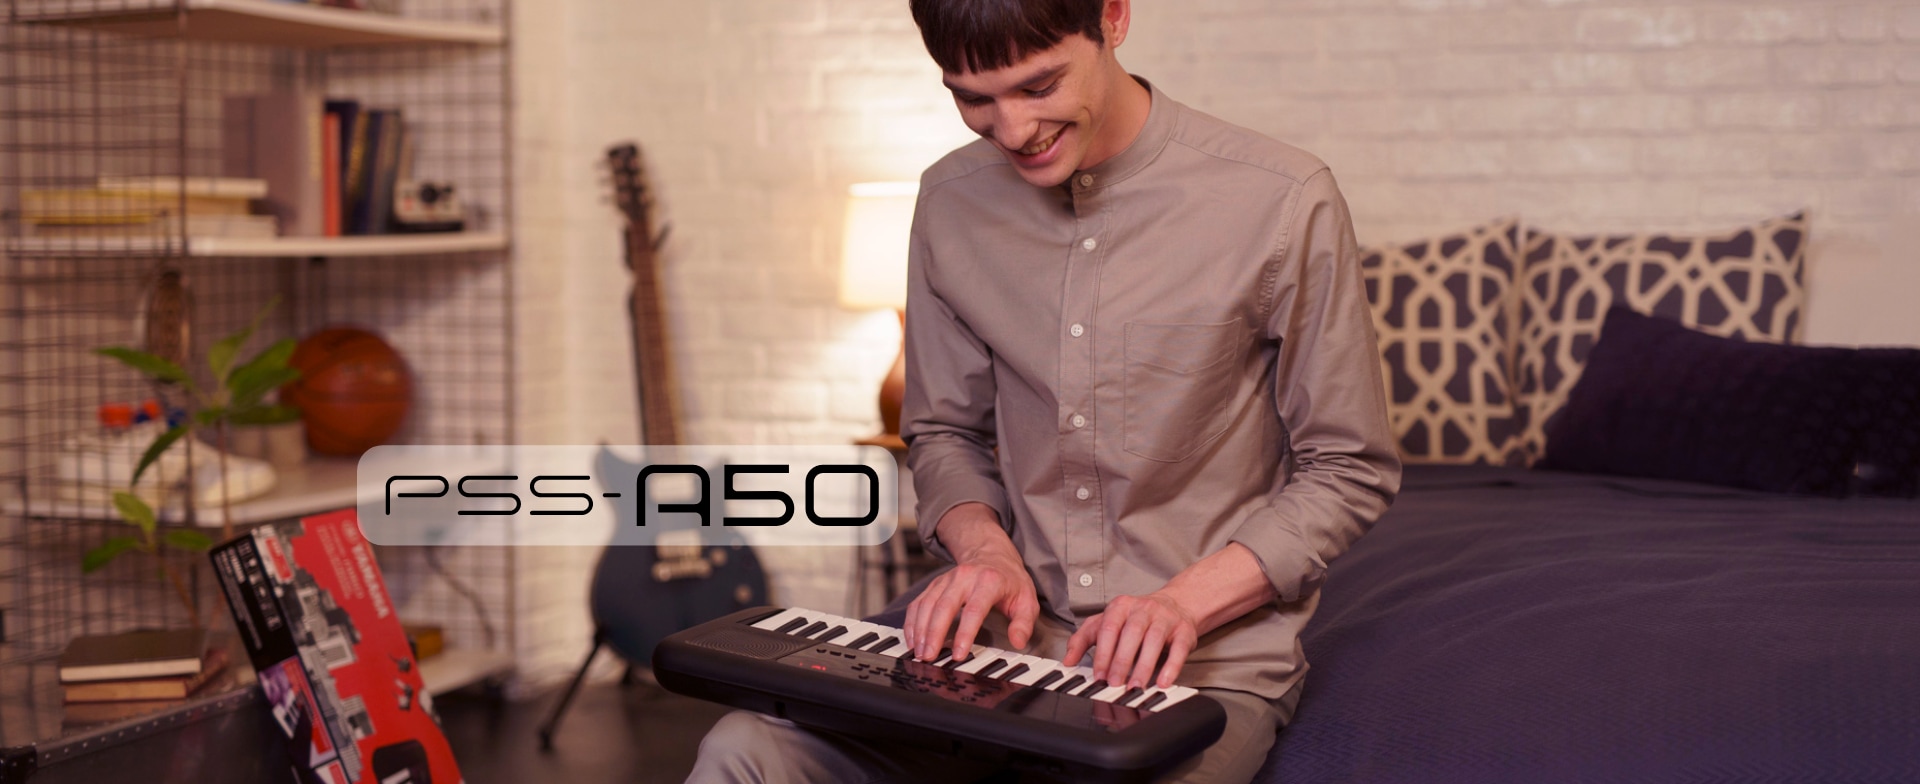 Yamaha Pss-a50 - Entertainer Keyboard - Variation 8